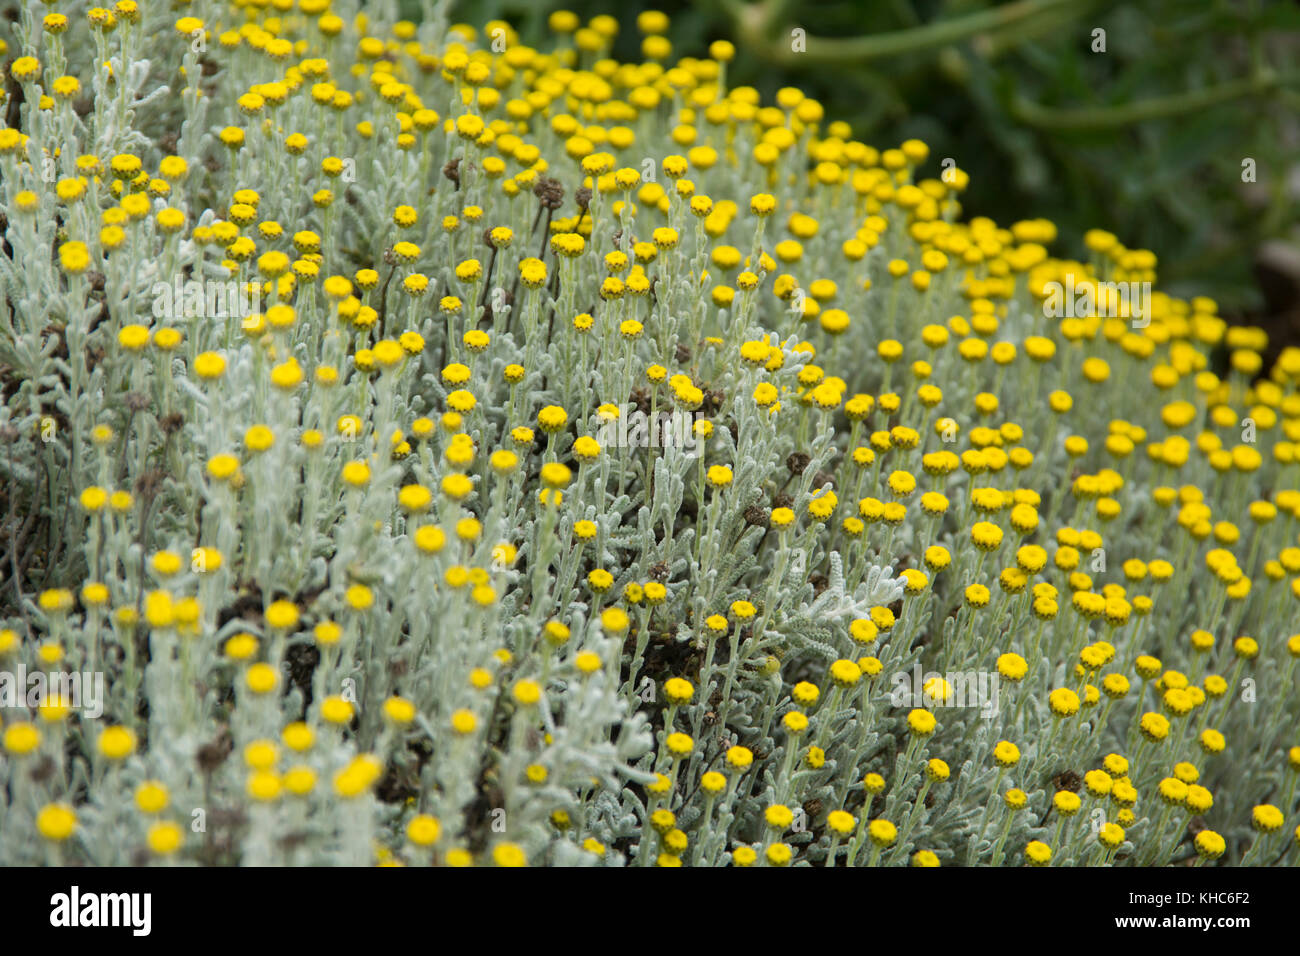 helichrysum stoechas *** Local Caption *** France, sud, Mediterranean, flower, yellow, helichrysum stoechas, macro Stock Photo